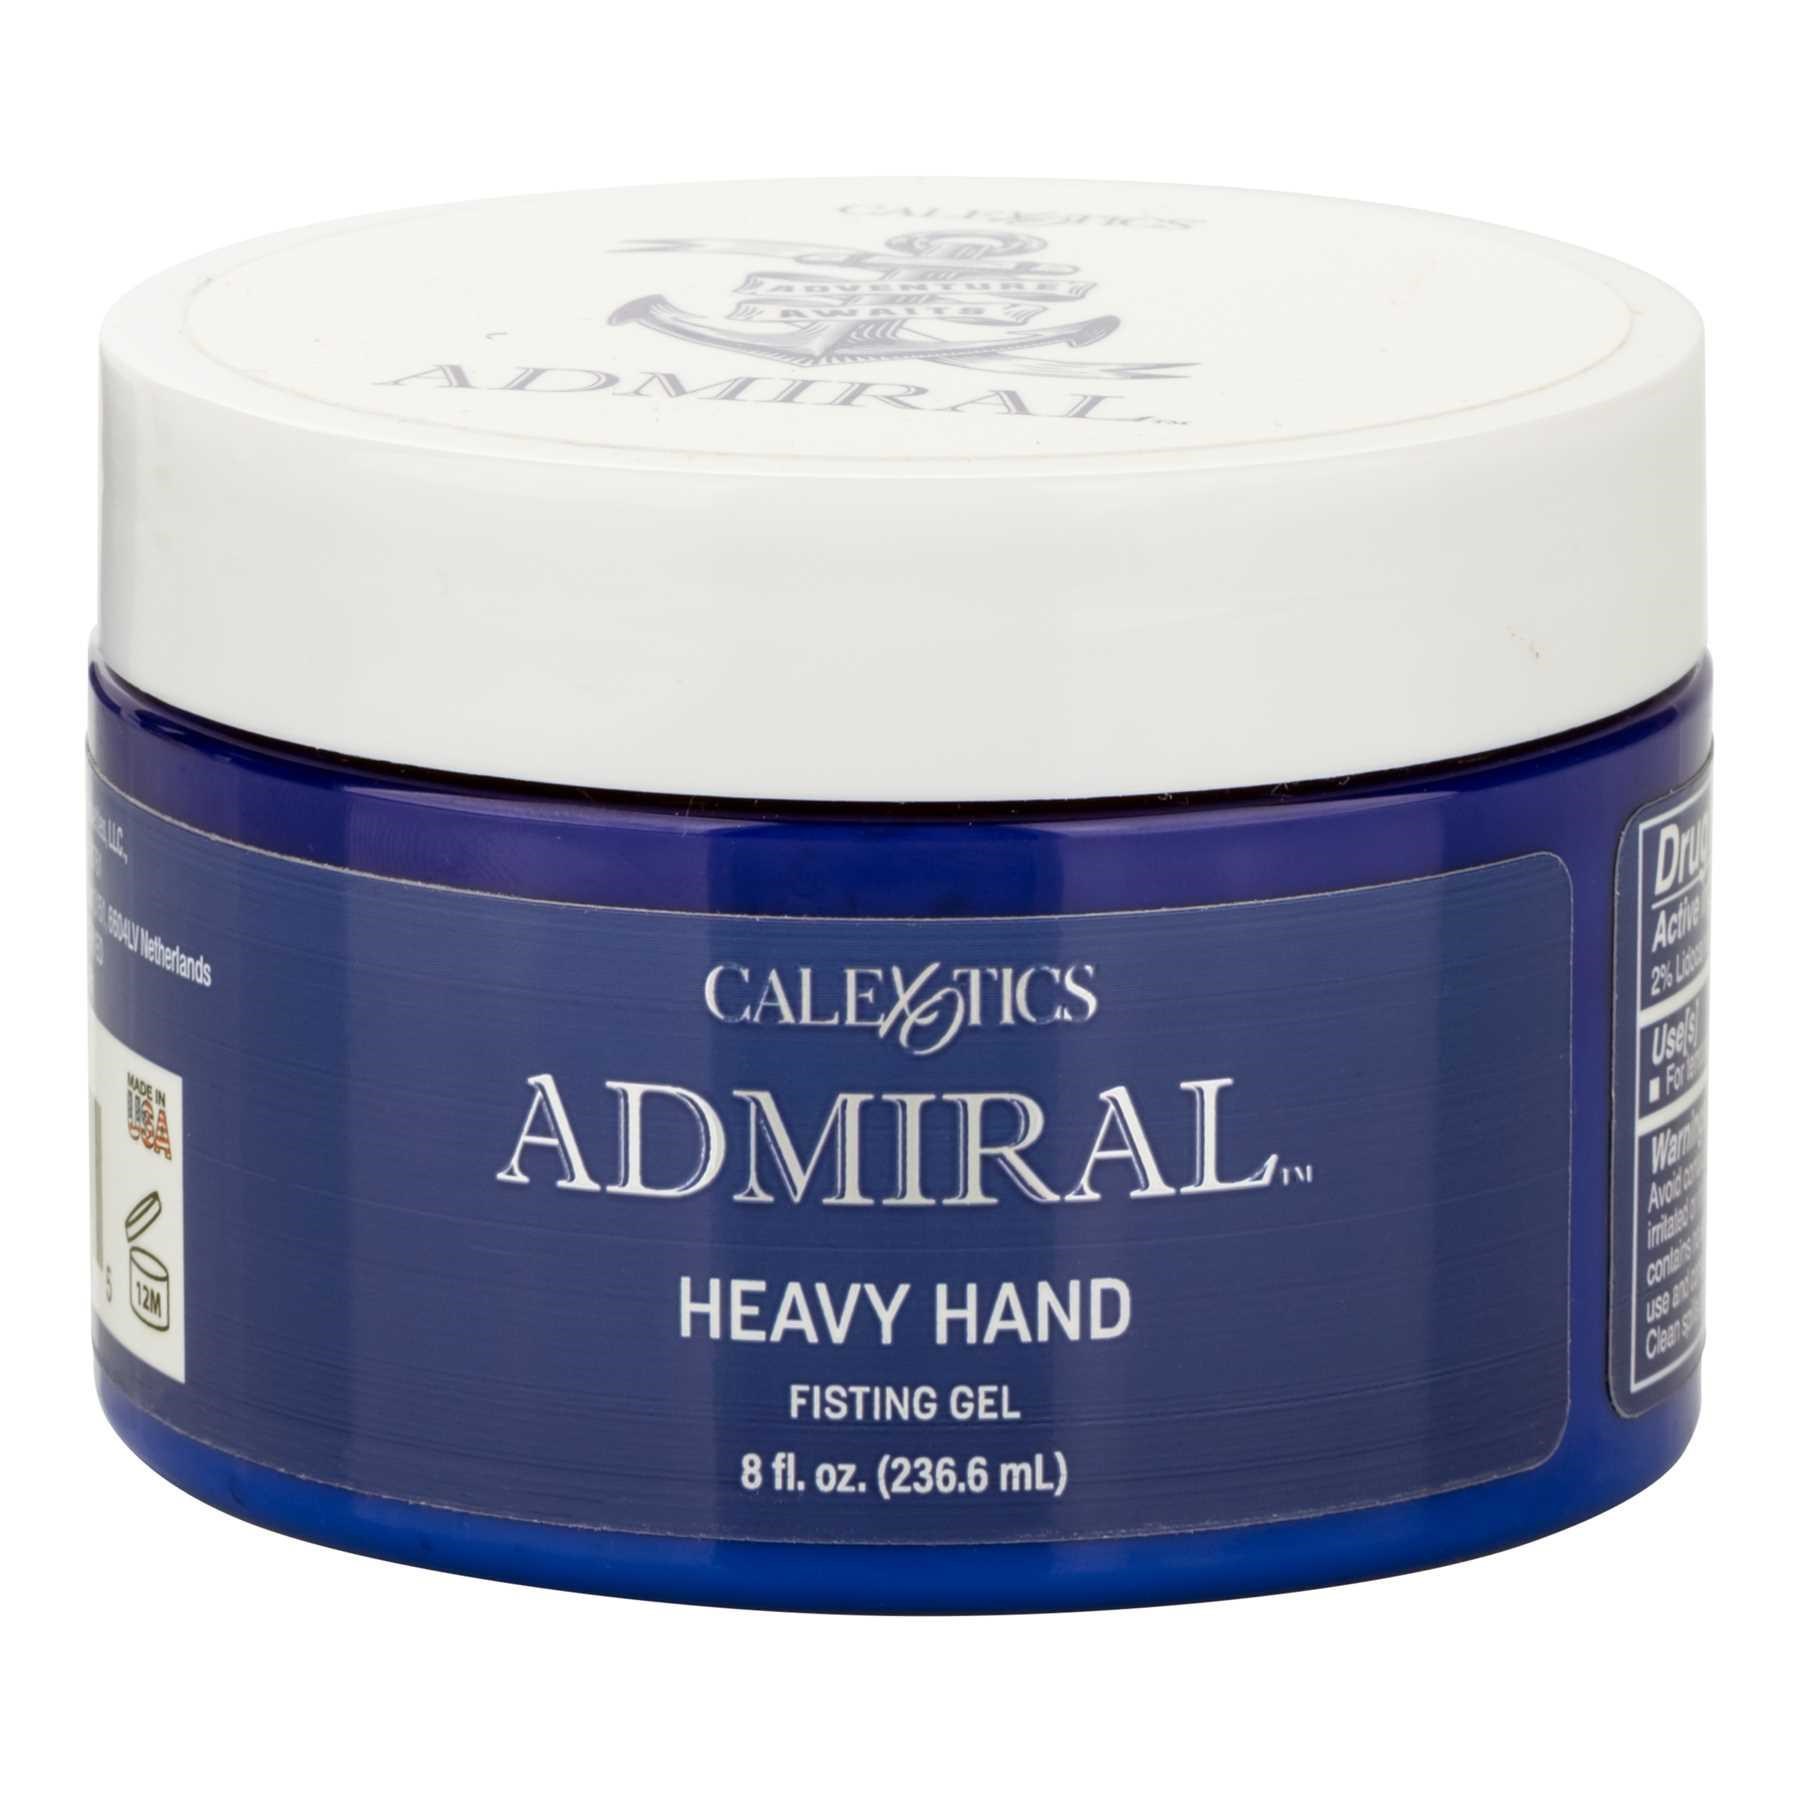 I592-Admiral™ Heavy Hand Fisting Gel Jar front